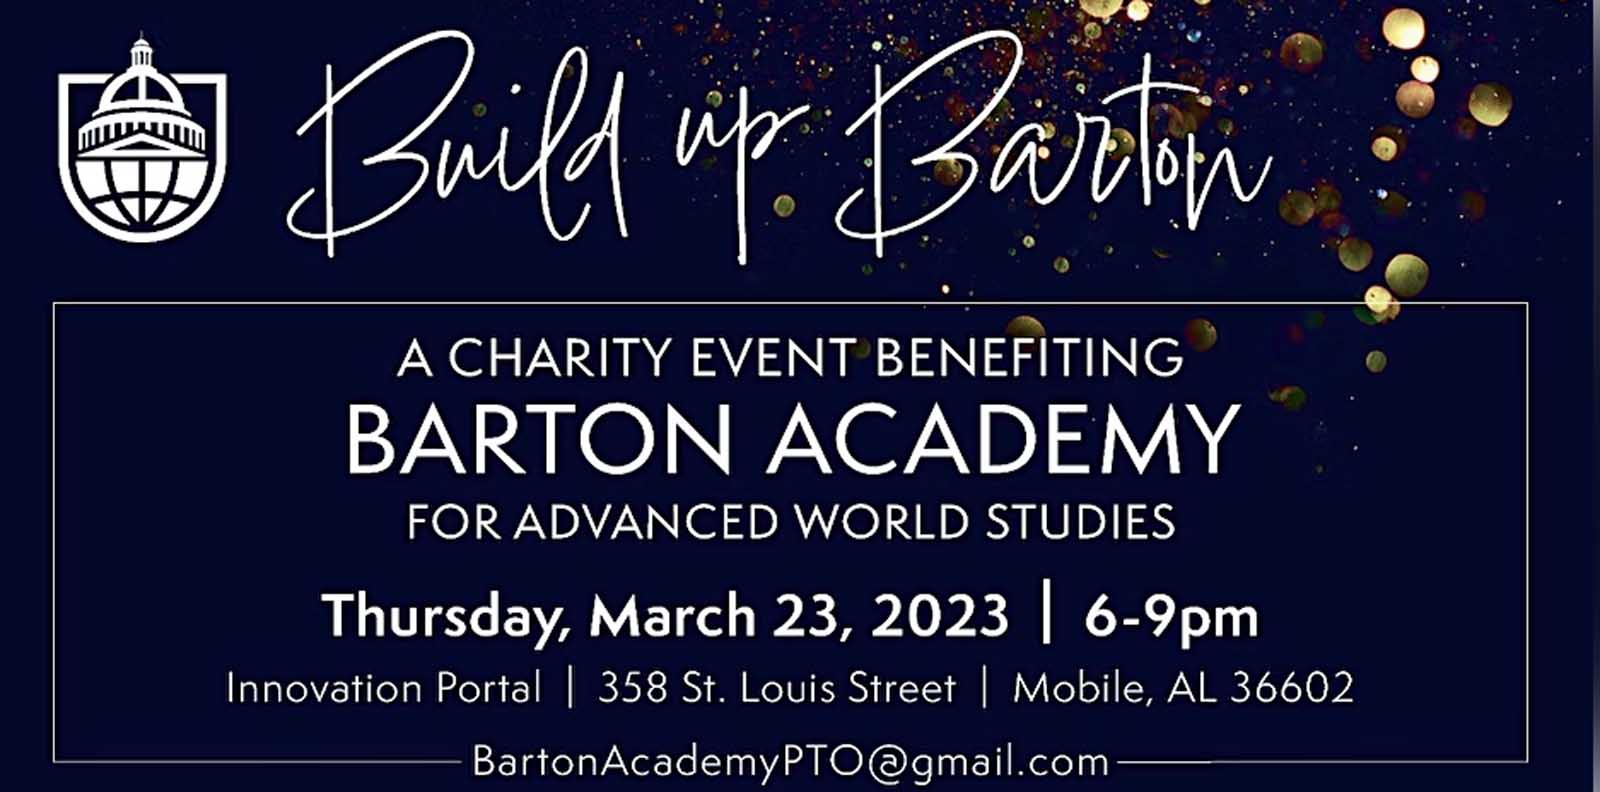 Barton Academy Fundraiser Coming Up